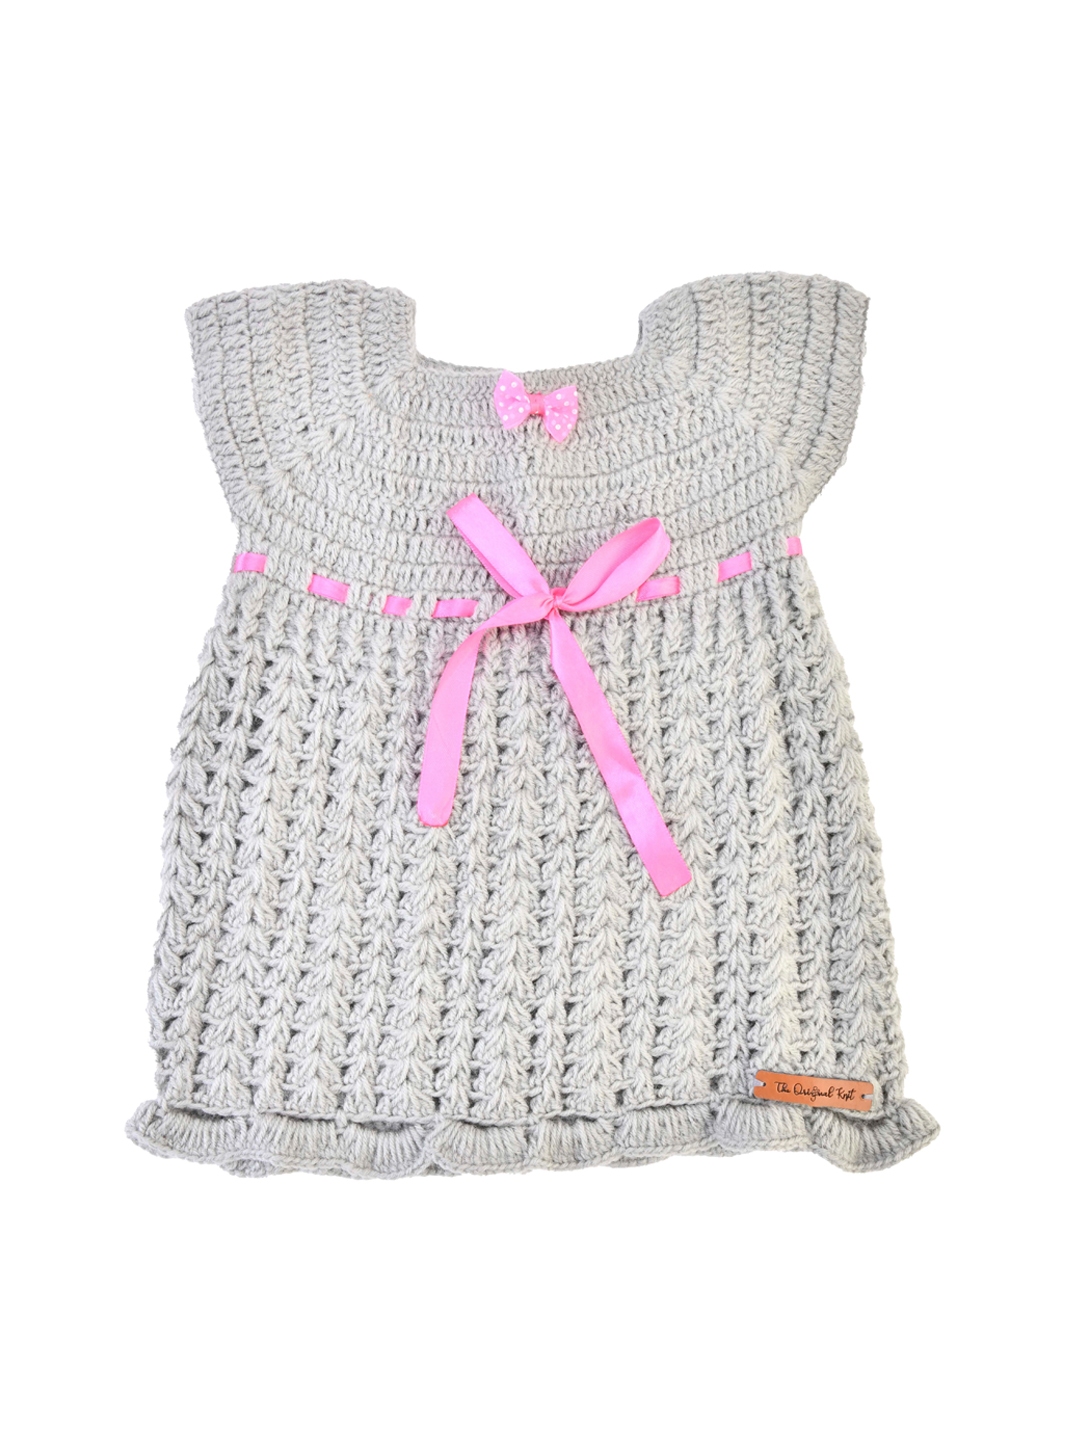 Buy The Original Knit Girls Grey & Pink Handmade Dress - Dresses for ...